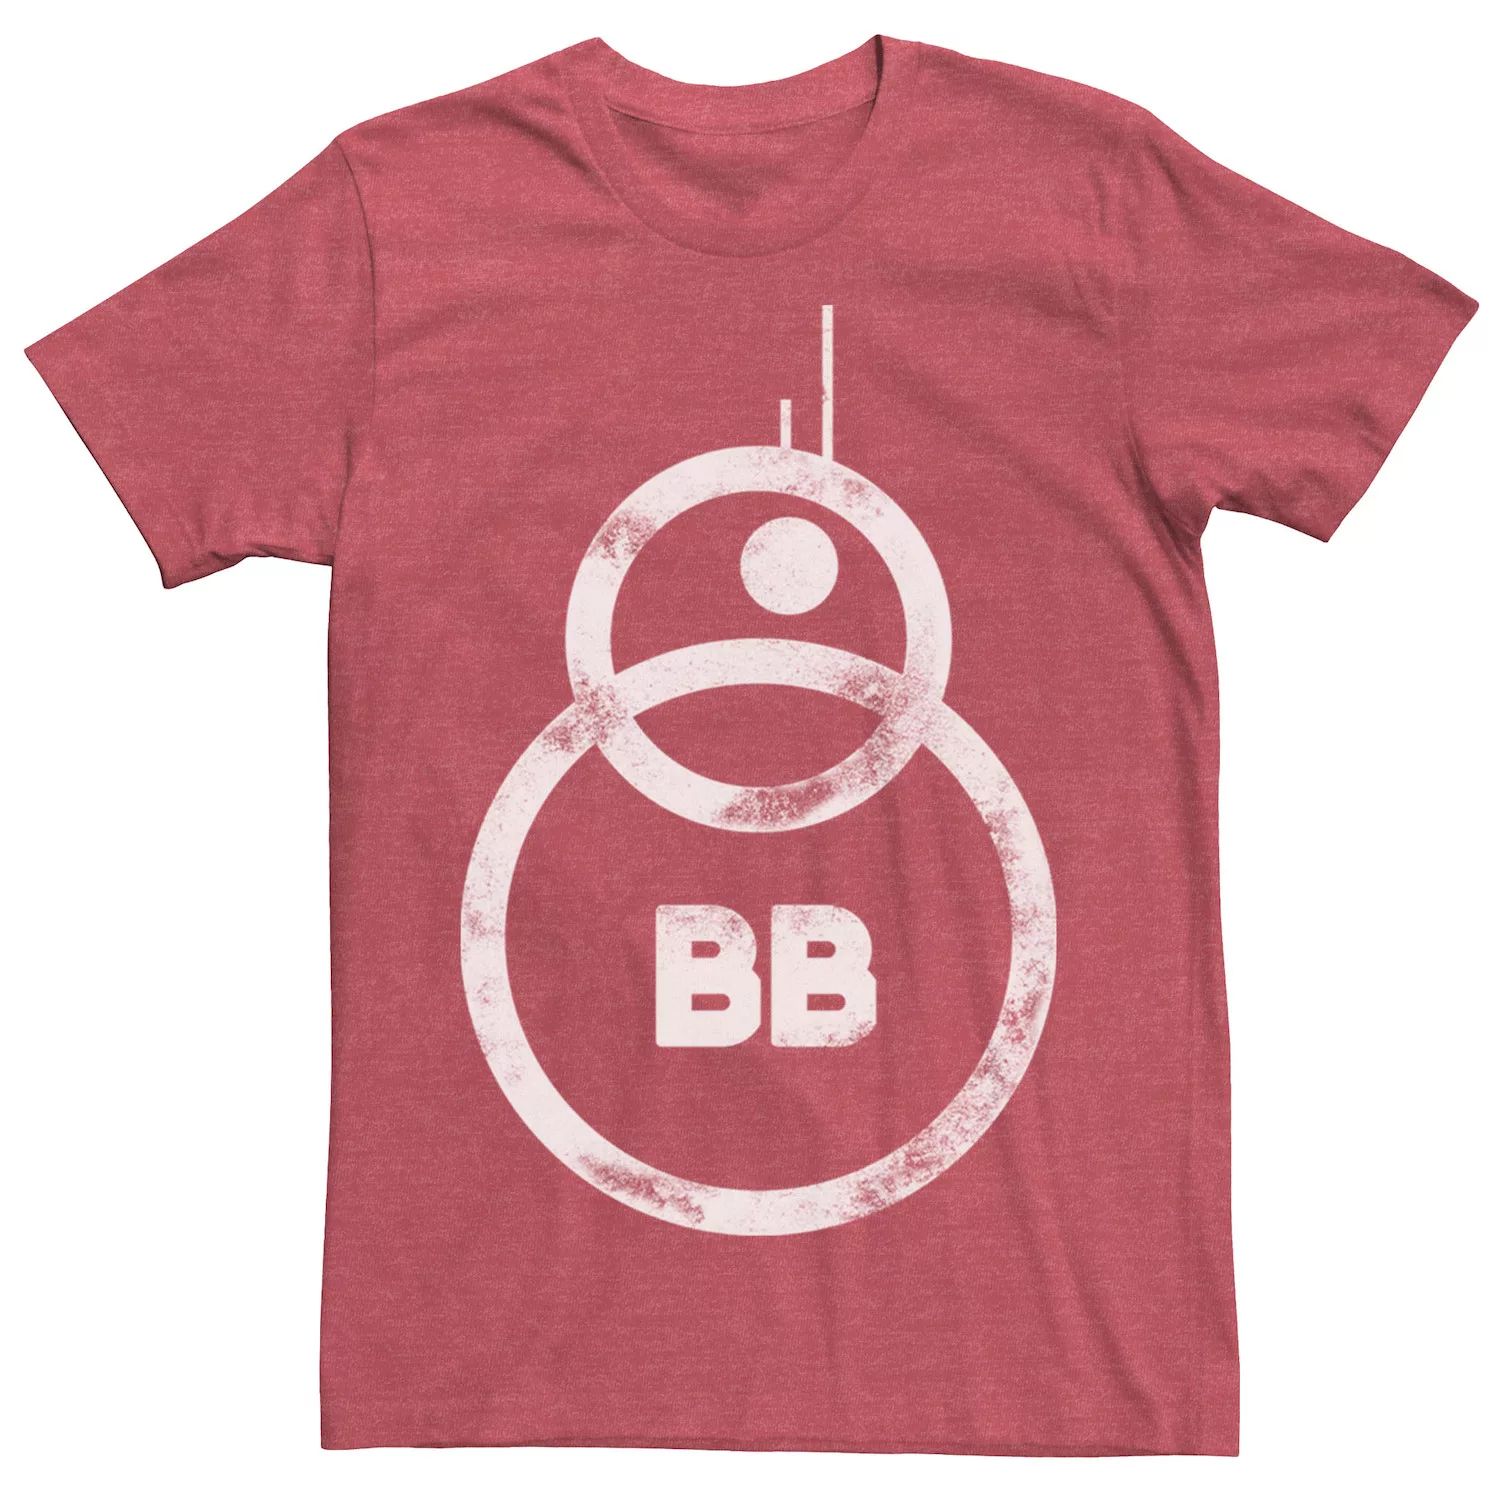 Мужская футболка BB-8 Star Wars